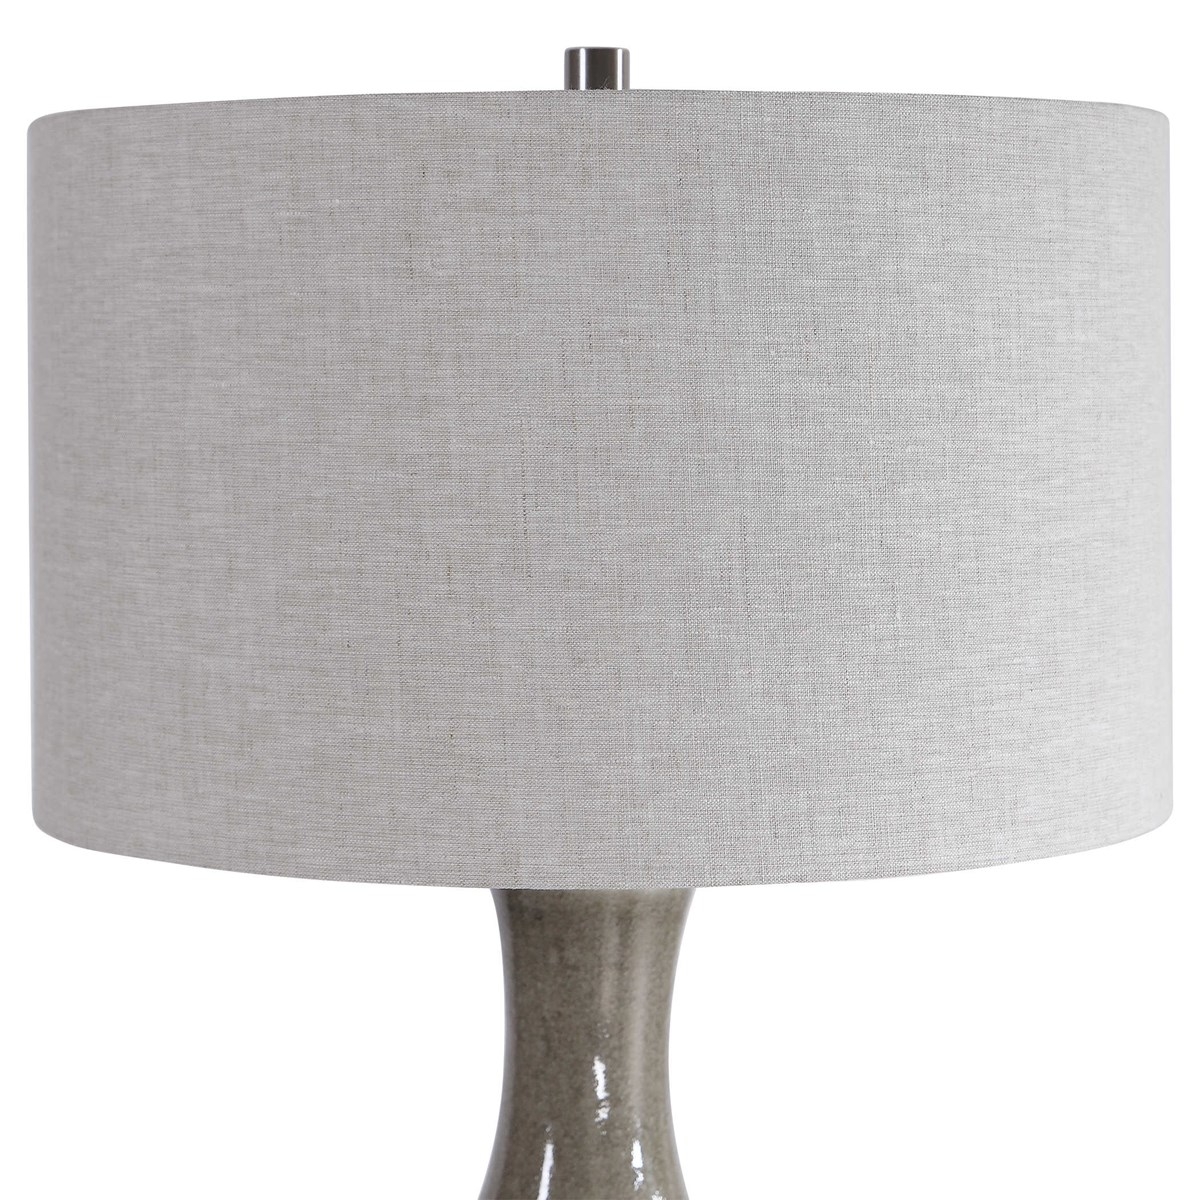 SAVIN TABLE LAMP - Image 4